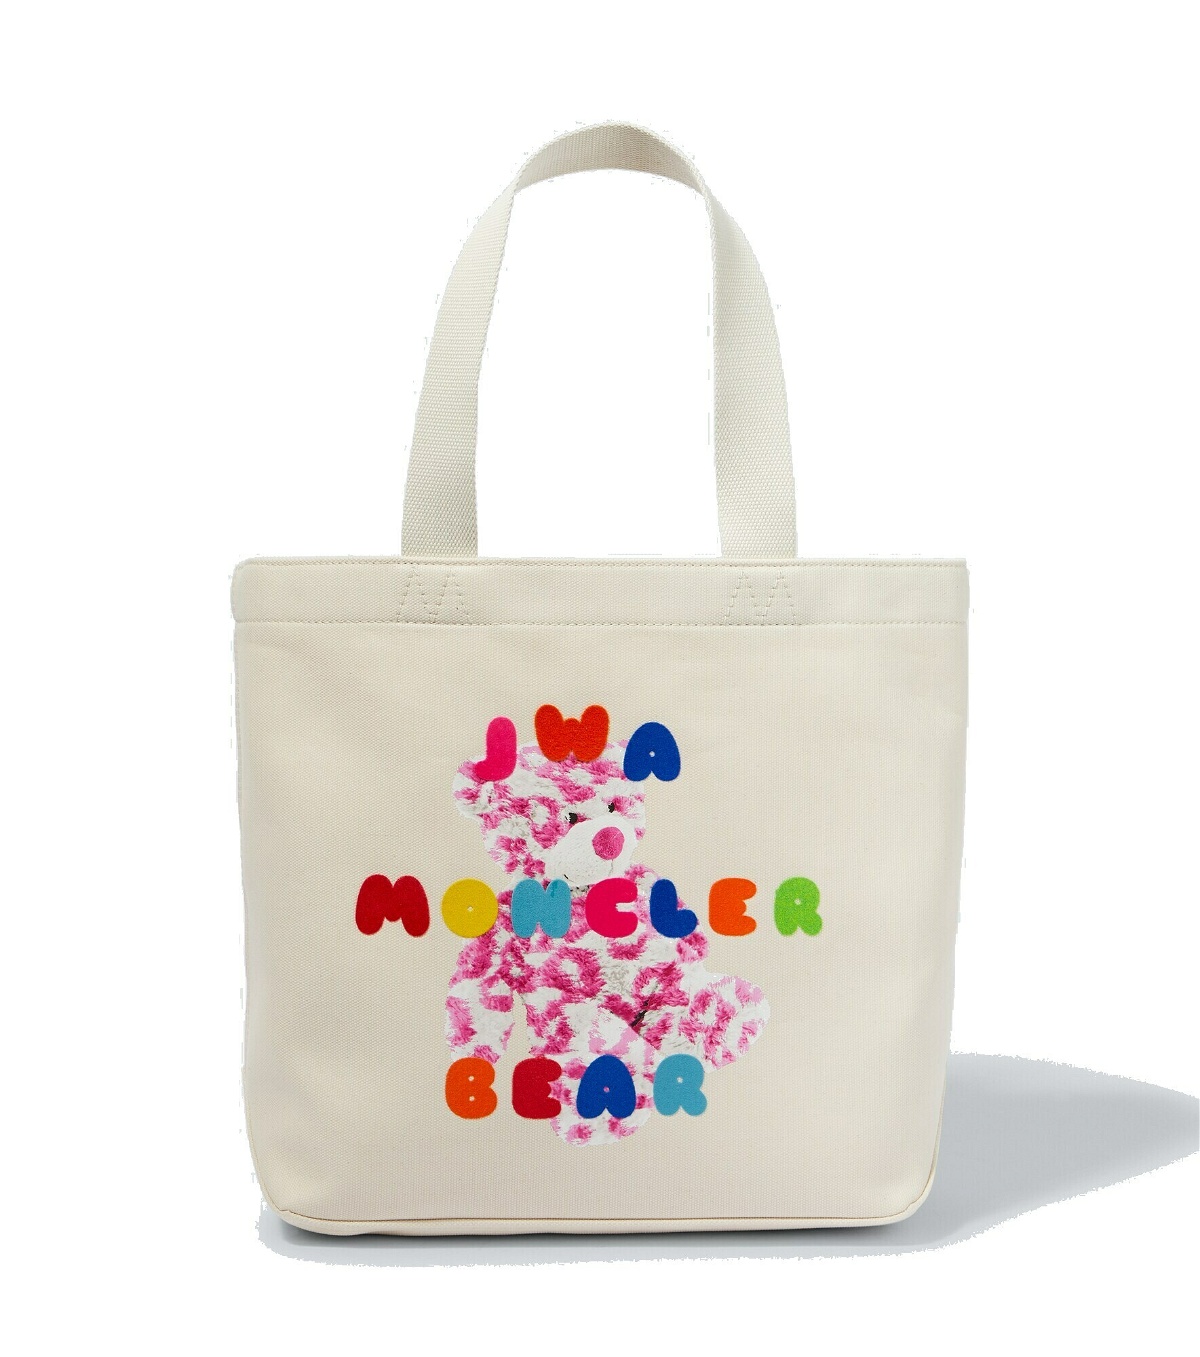 Photo: Moncler Genius - 1 Moncler JW Anderson Medium printed tote bag